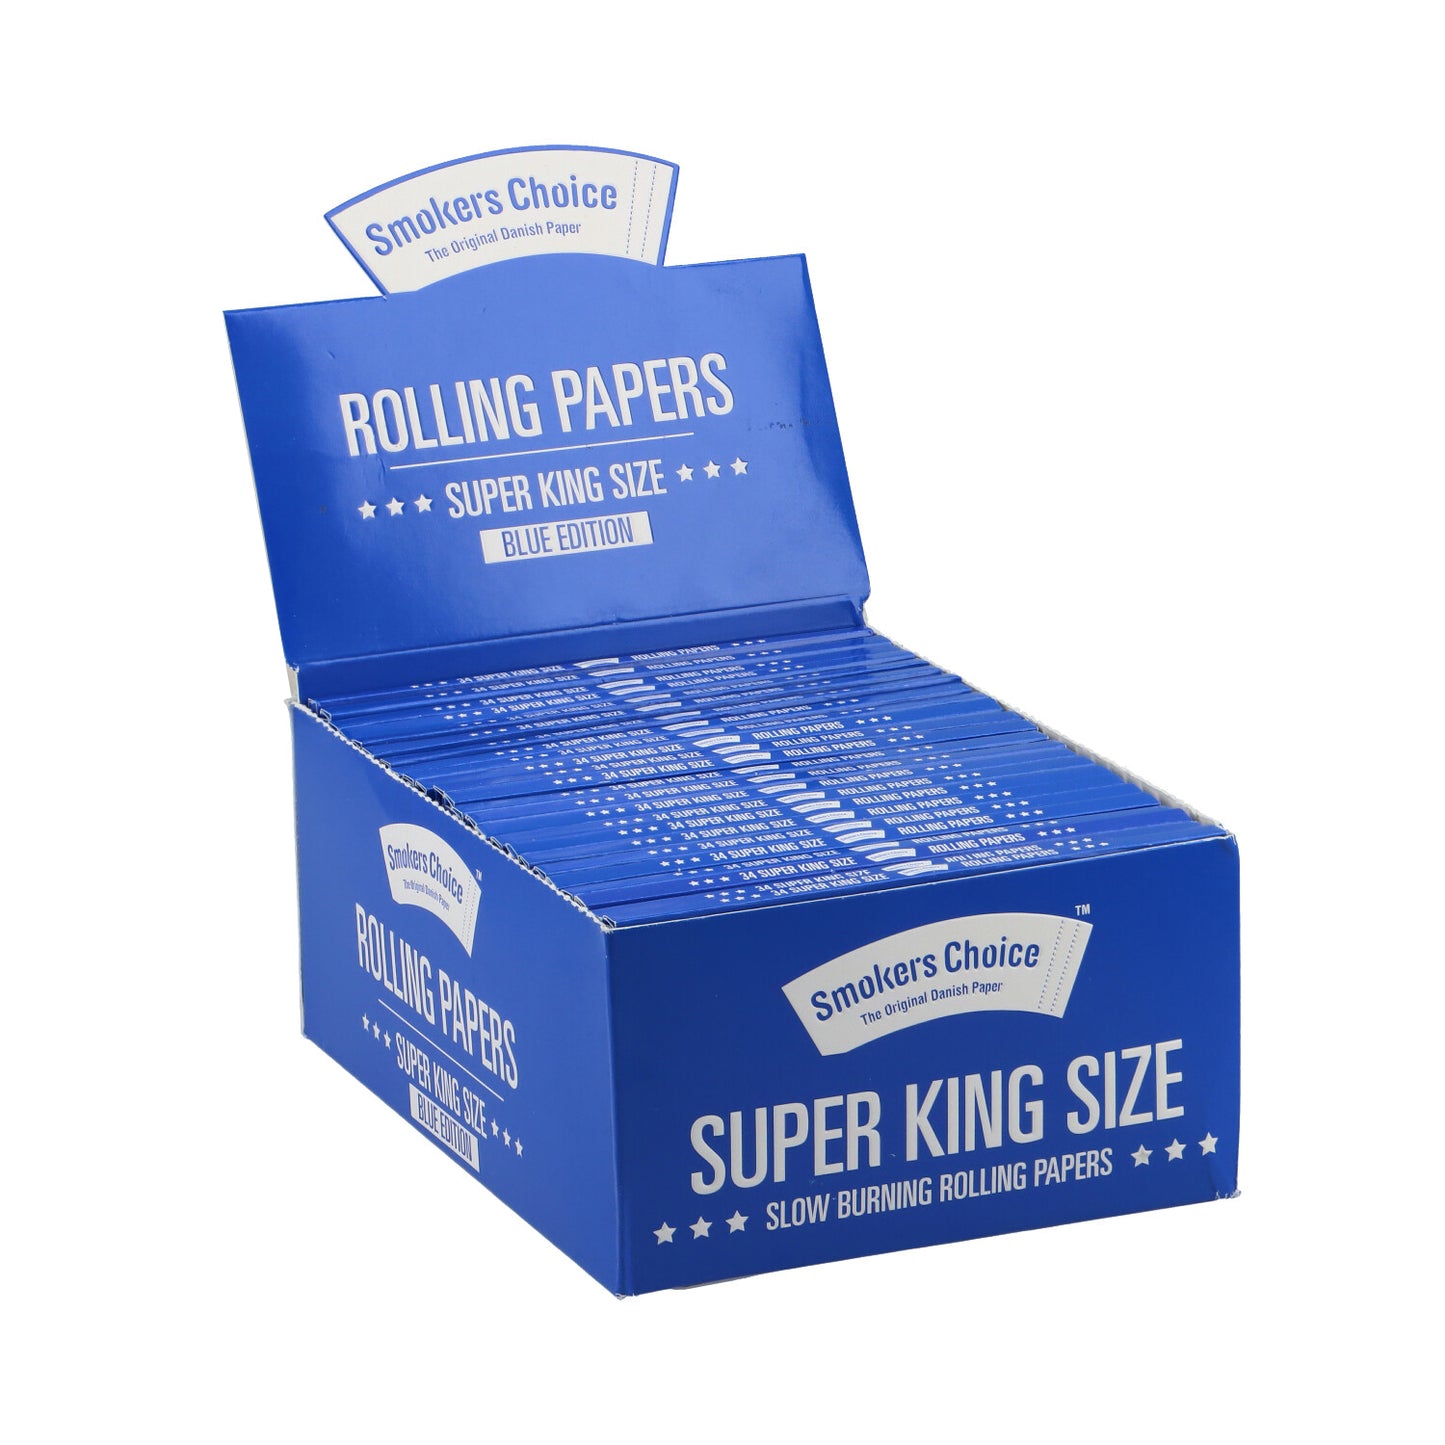 Super King Size Rulle Papir Kasse - Blå